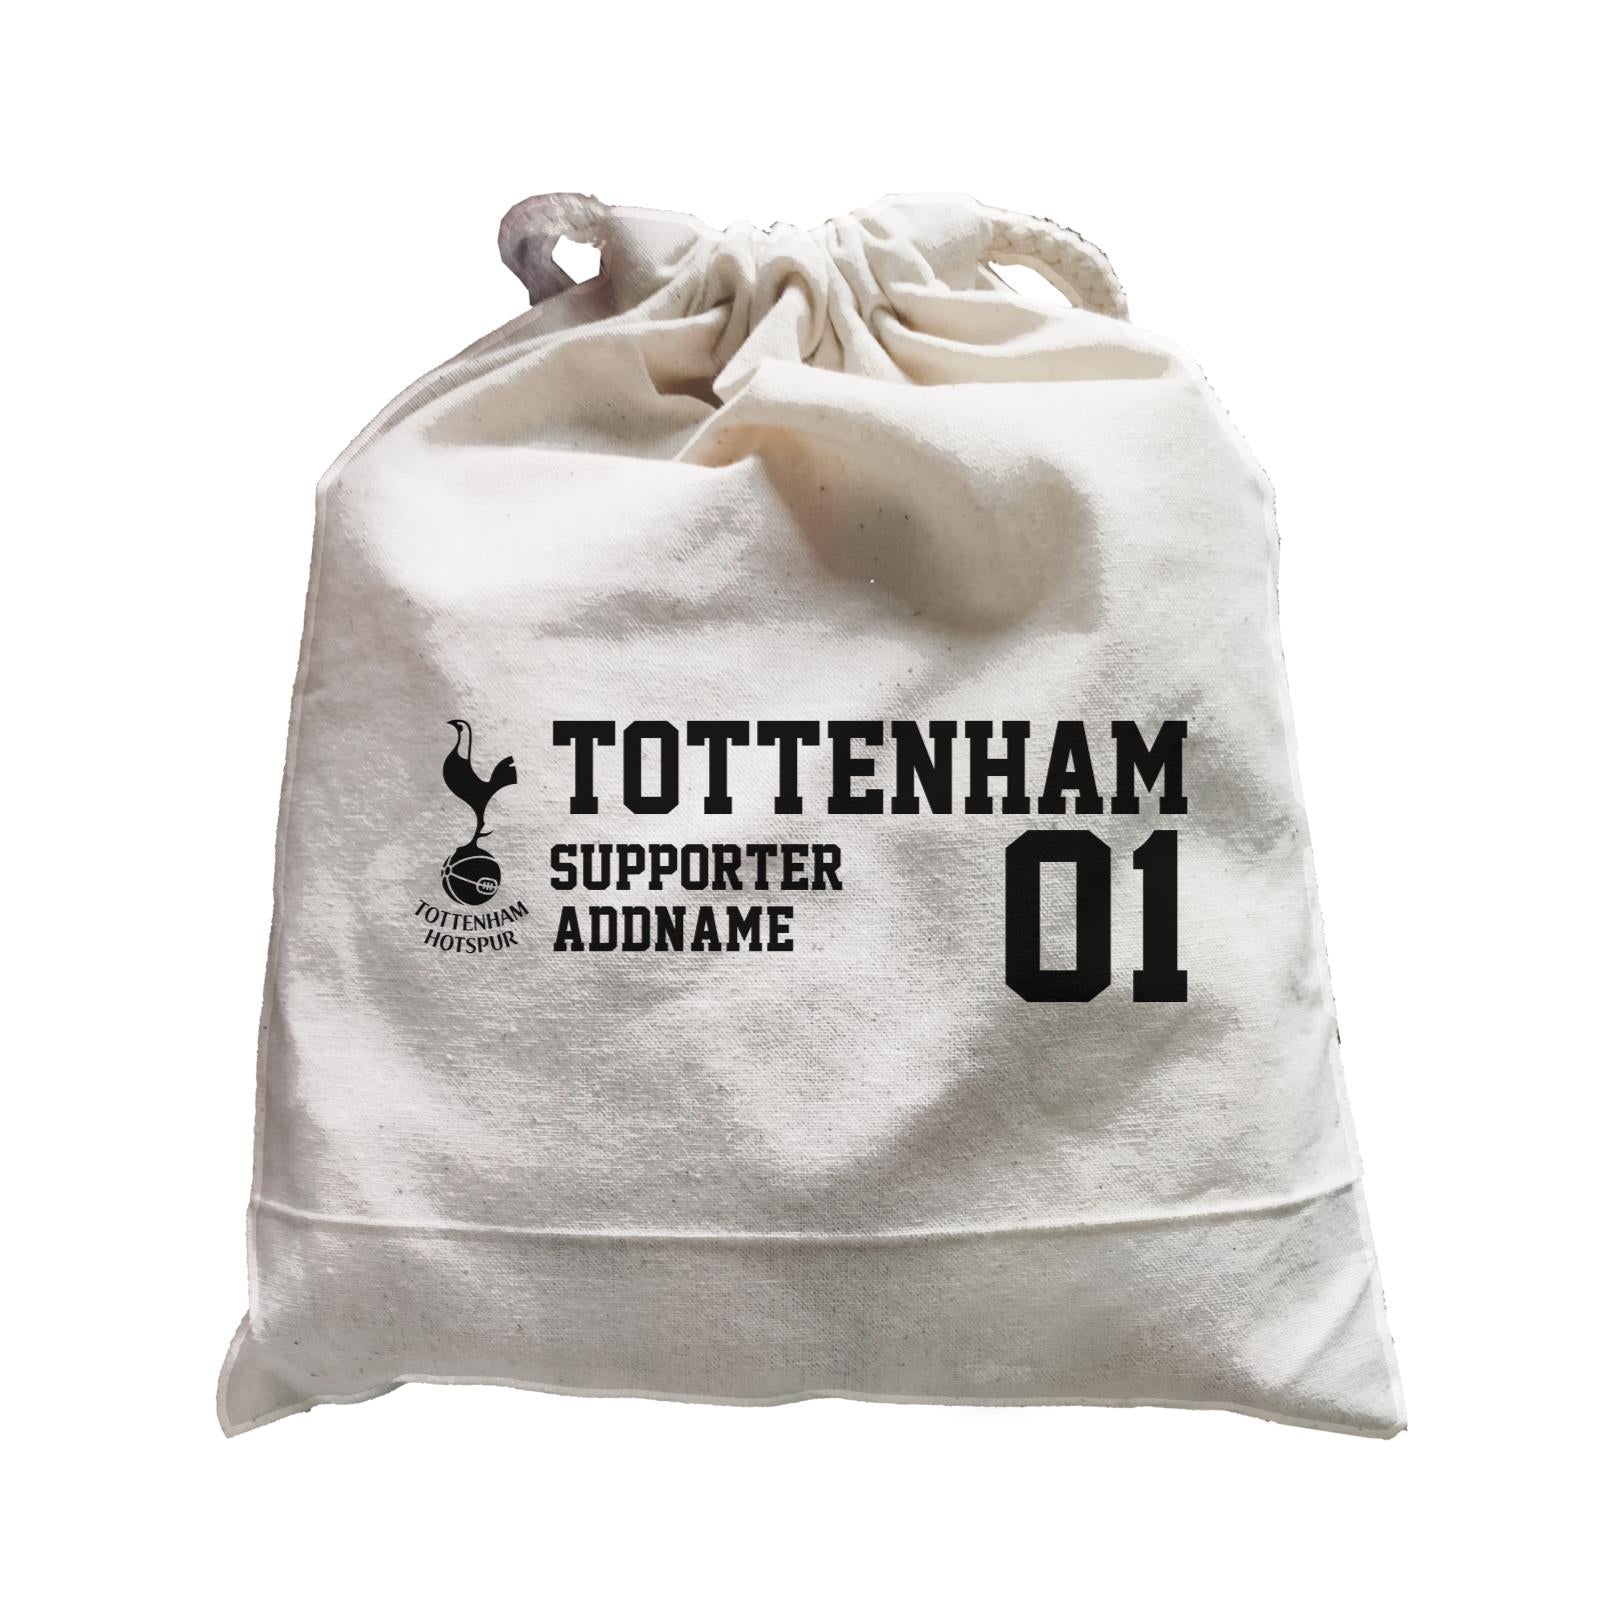 Tottenham Hotspur Football Supporter Accessories Addname Satchel